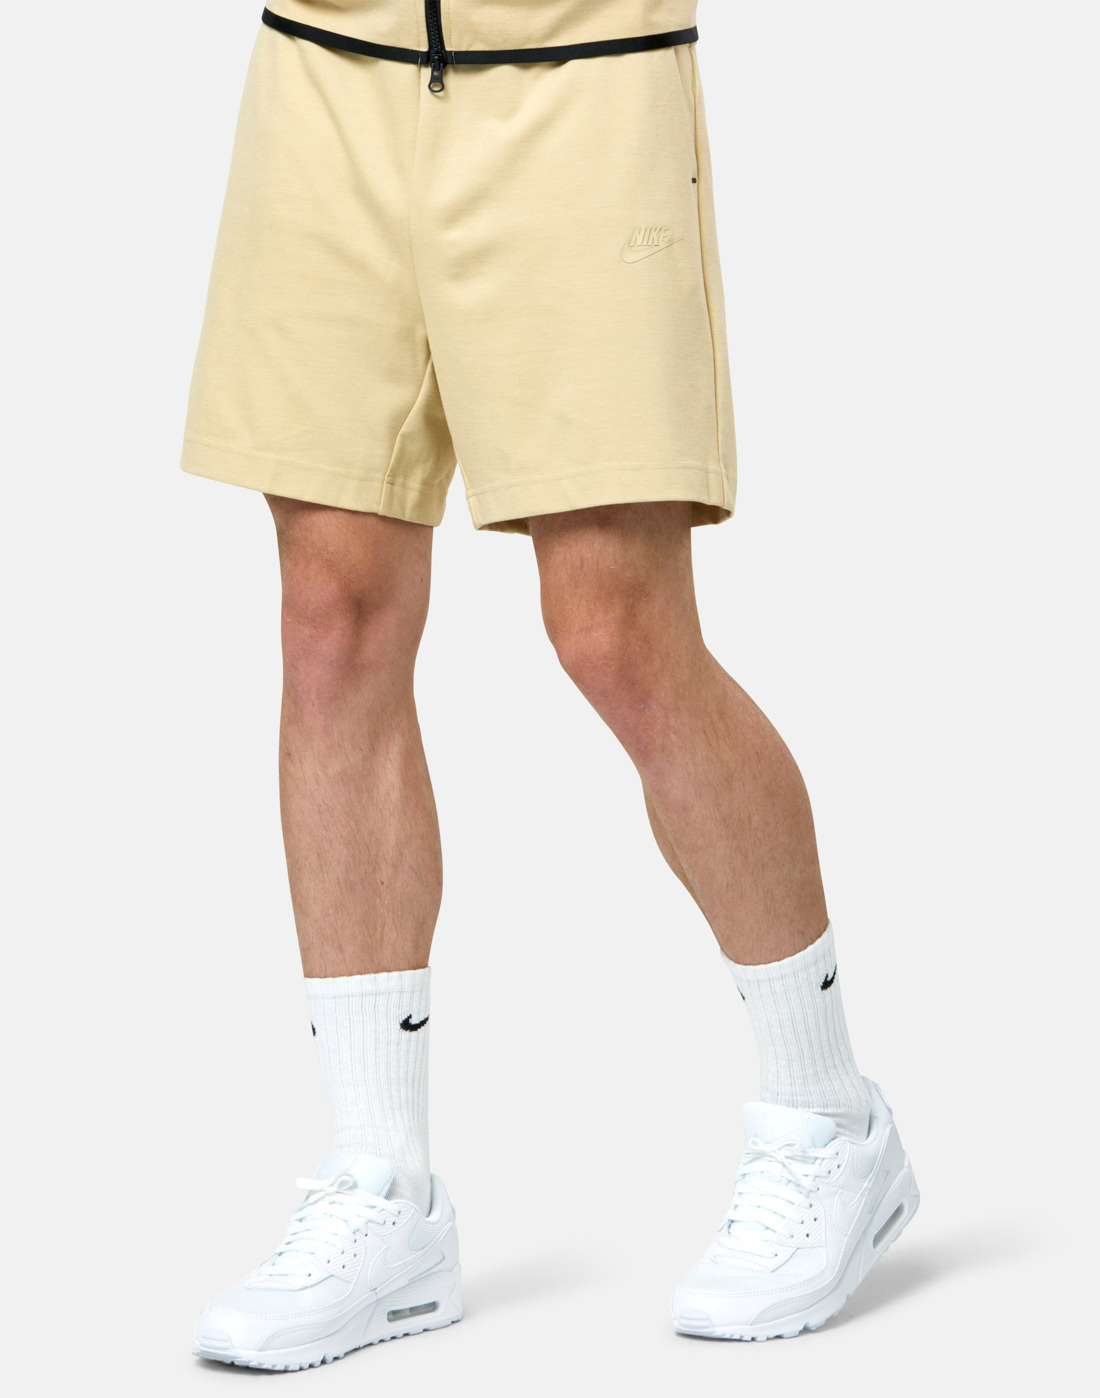 Nike Mens Tech Fleece Light Weight Shorts - Cream | Life Style Sports IE